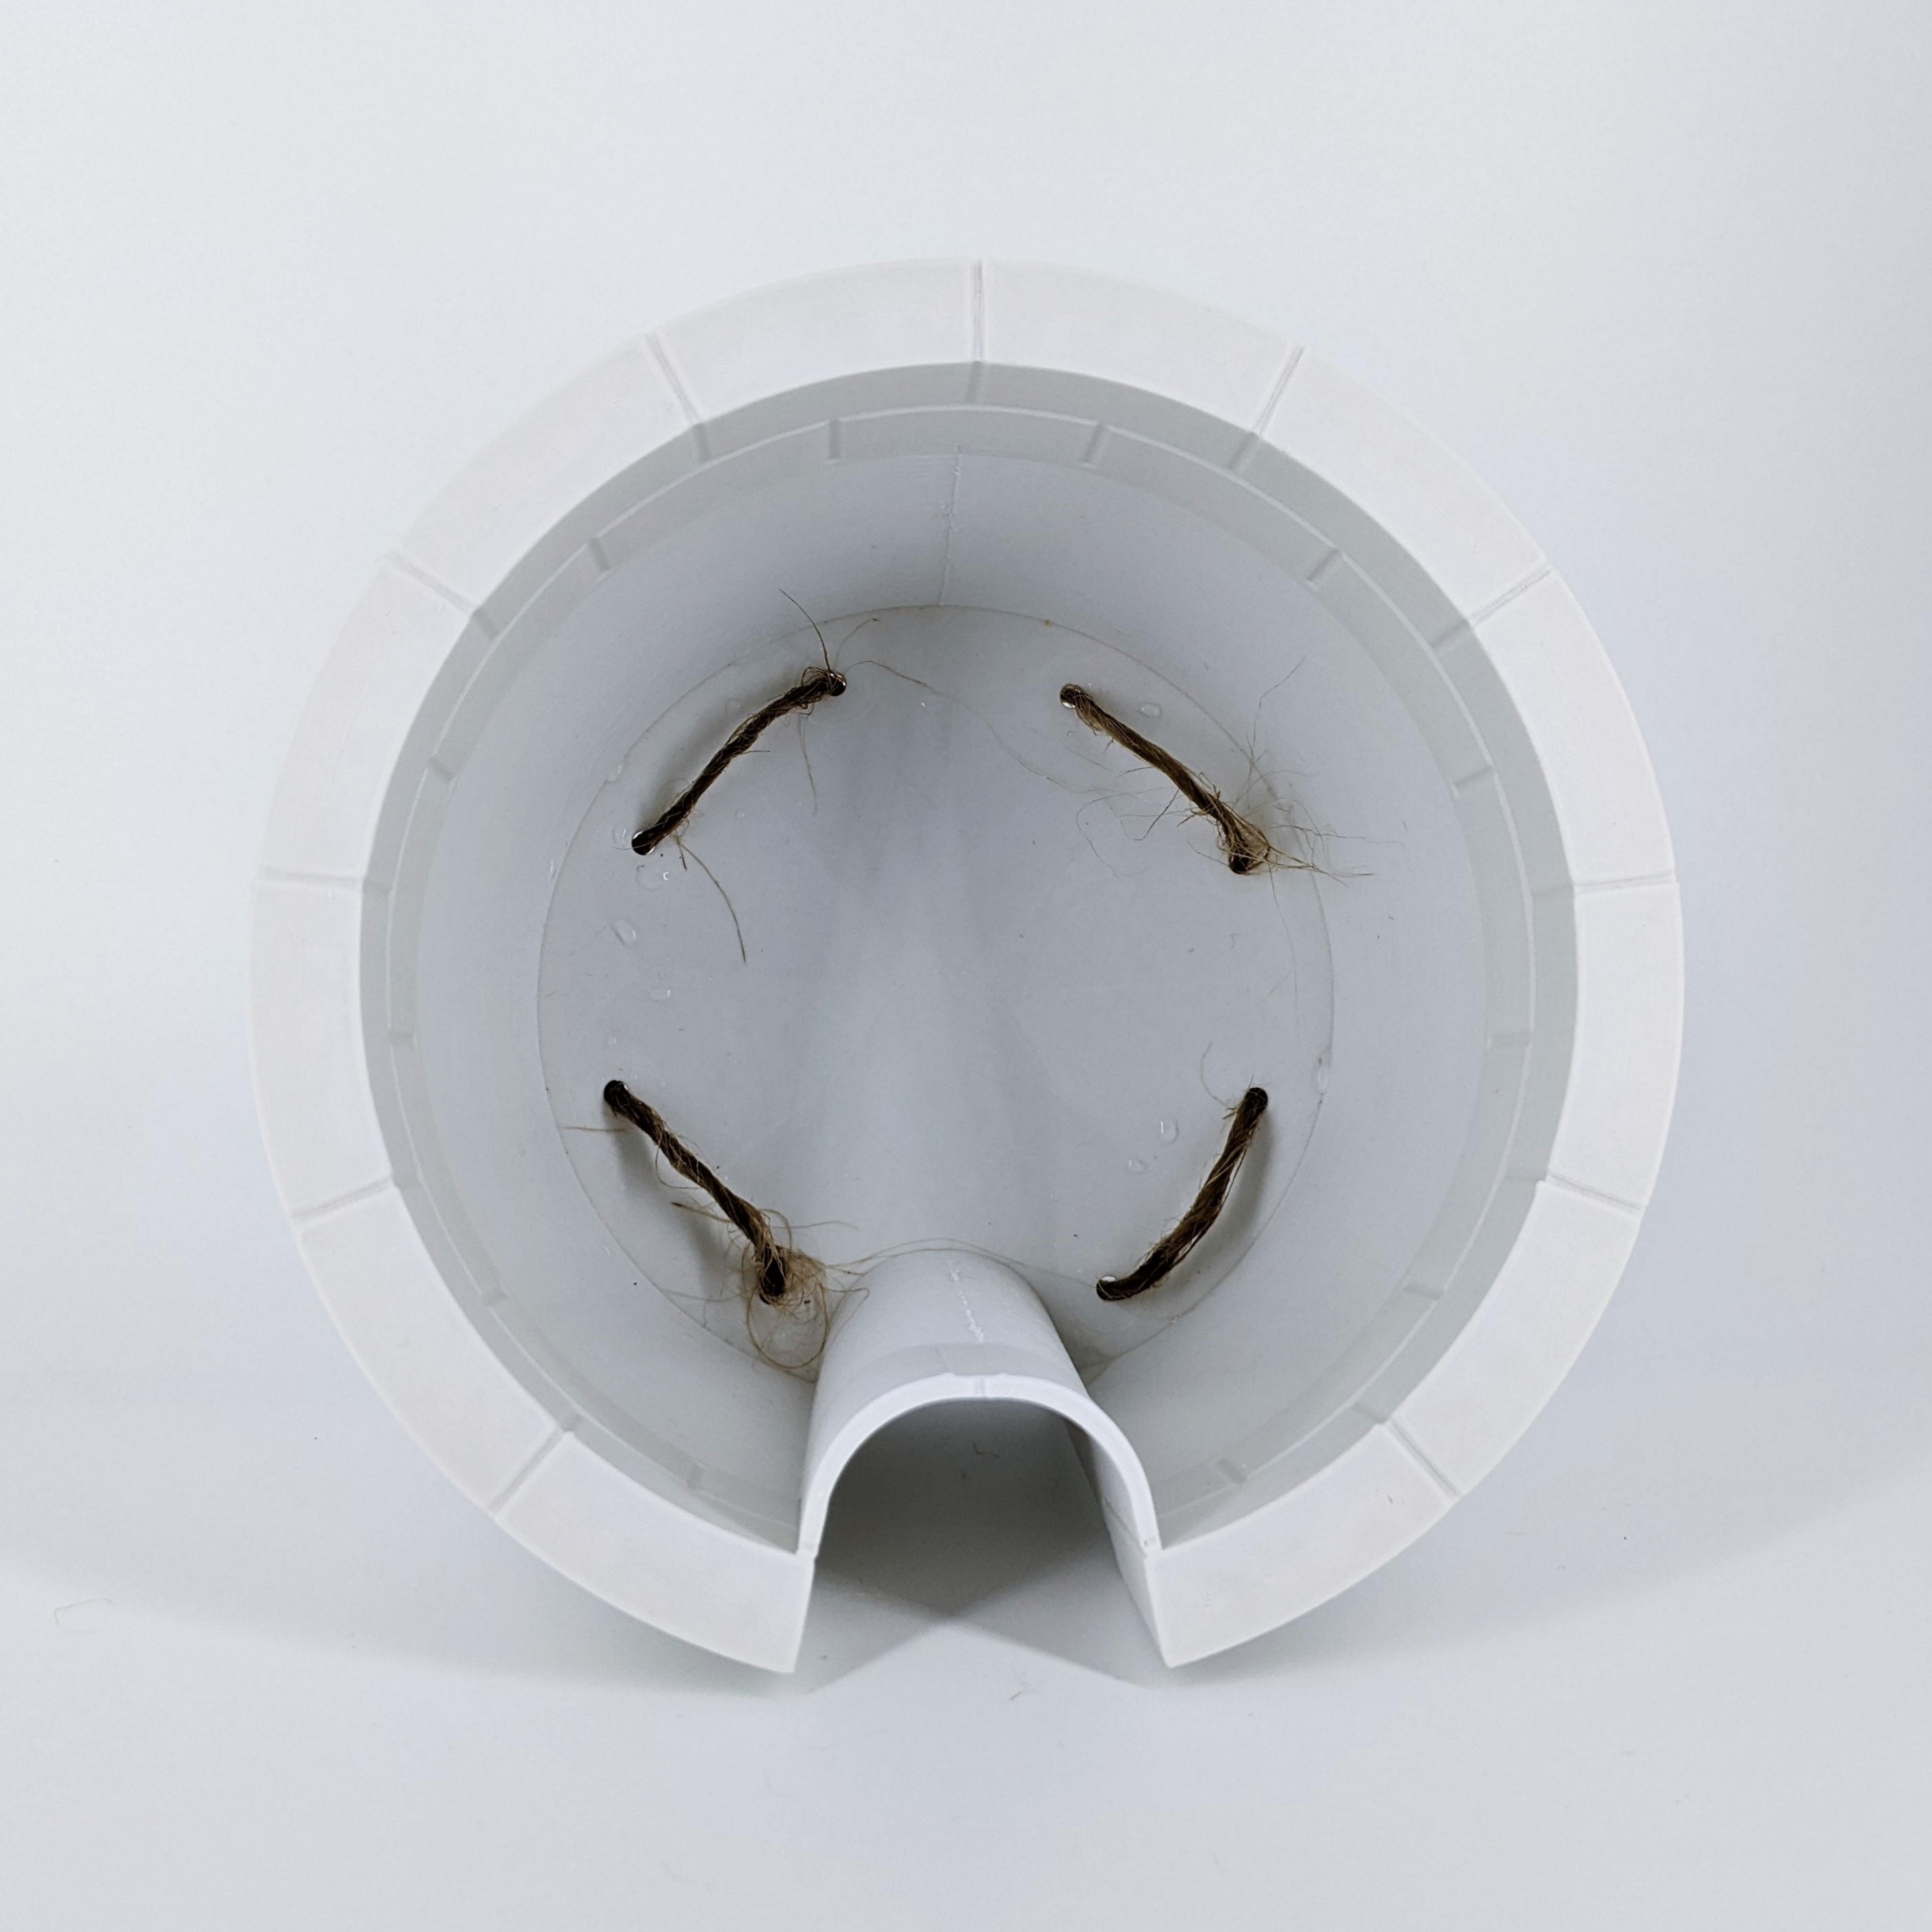 Self-Watering Plant Pot STL 3D Print File with a Gentleman Earthworm Companion | Planter STL 3d model